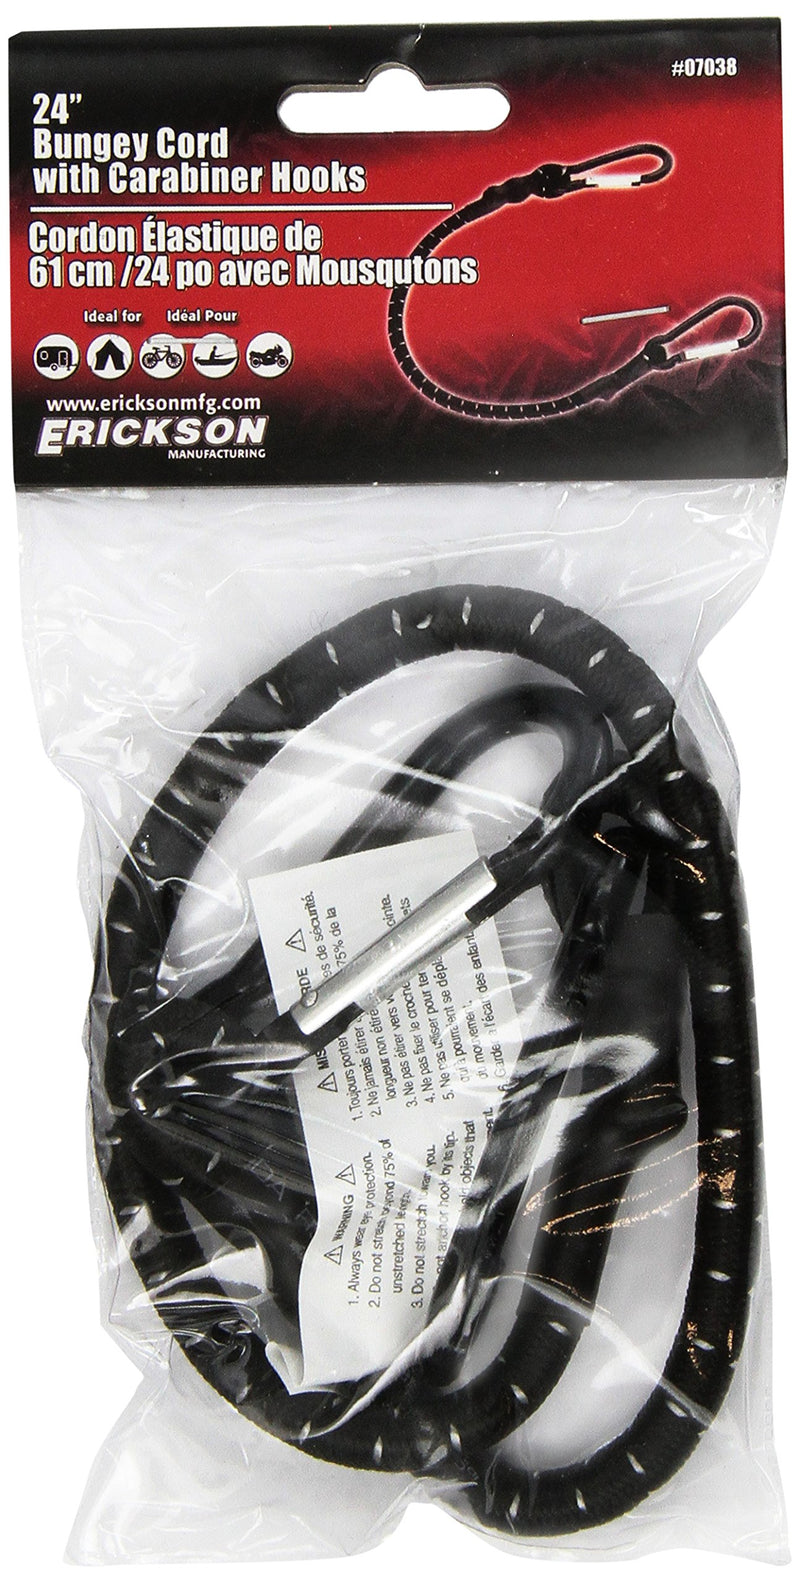  [AUSTRALIA] - Erickson 07038 24" Stretch Cord with Carabiner Hooks